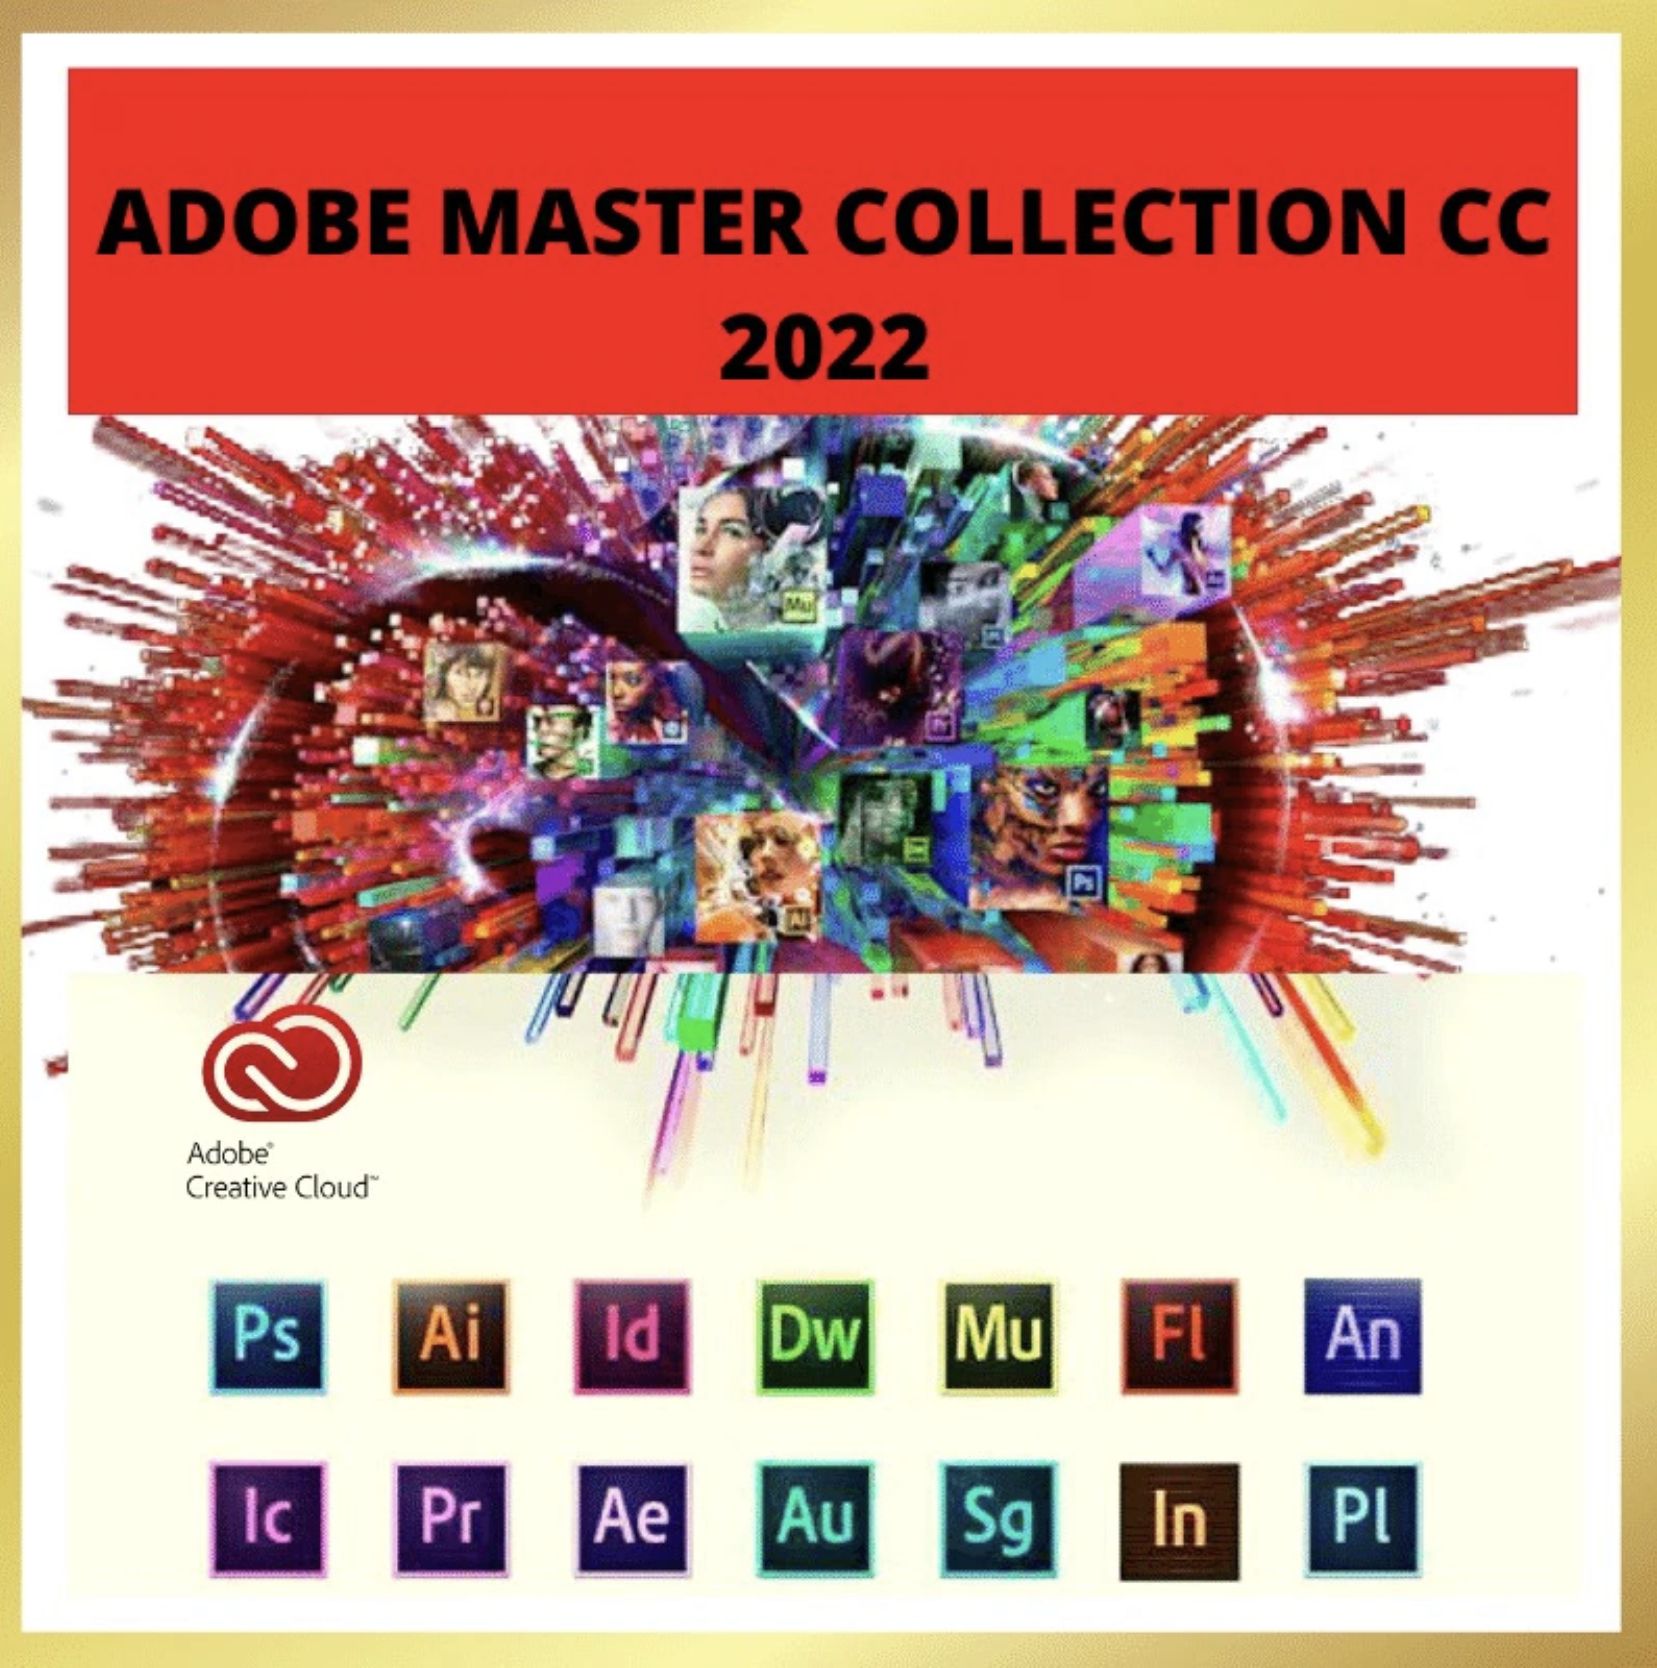 Adobe collection 2023. Adobe Master collection 2022. Адоб мастер коллекшн 2022. Adobe Master collection 2023. Адобе мастер коллекшн что это.